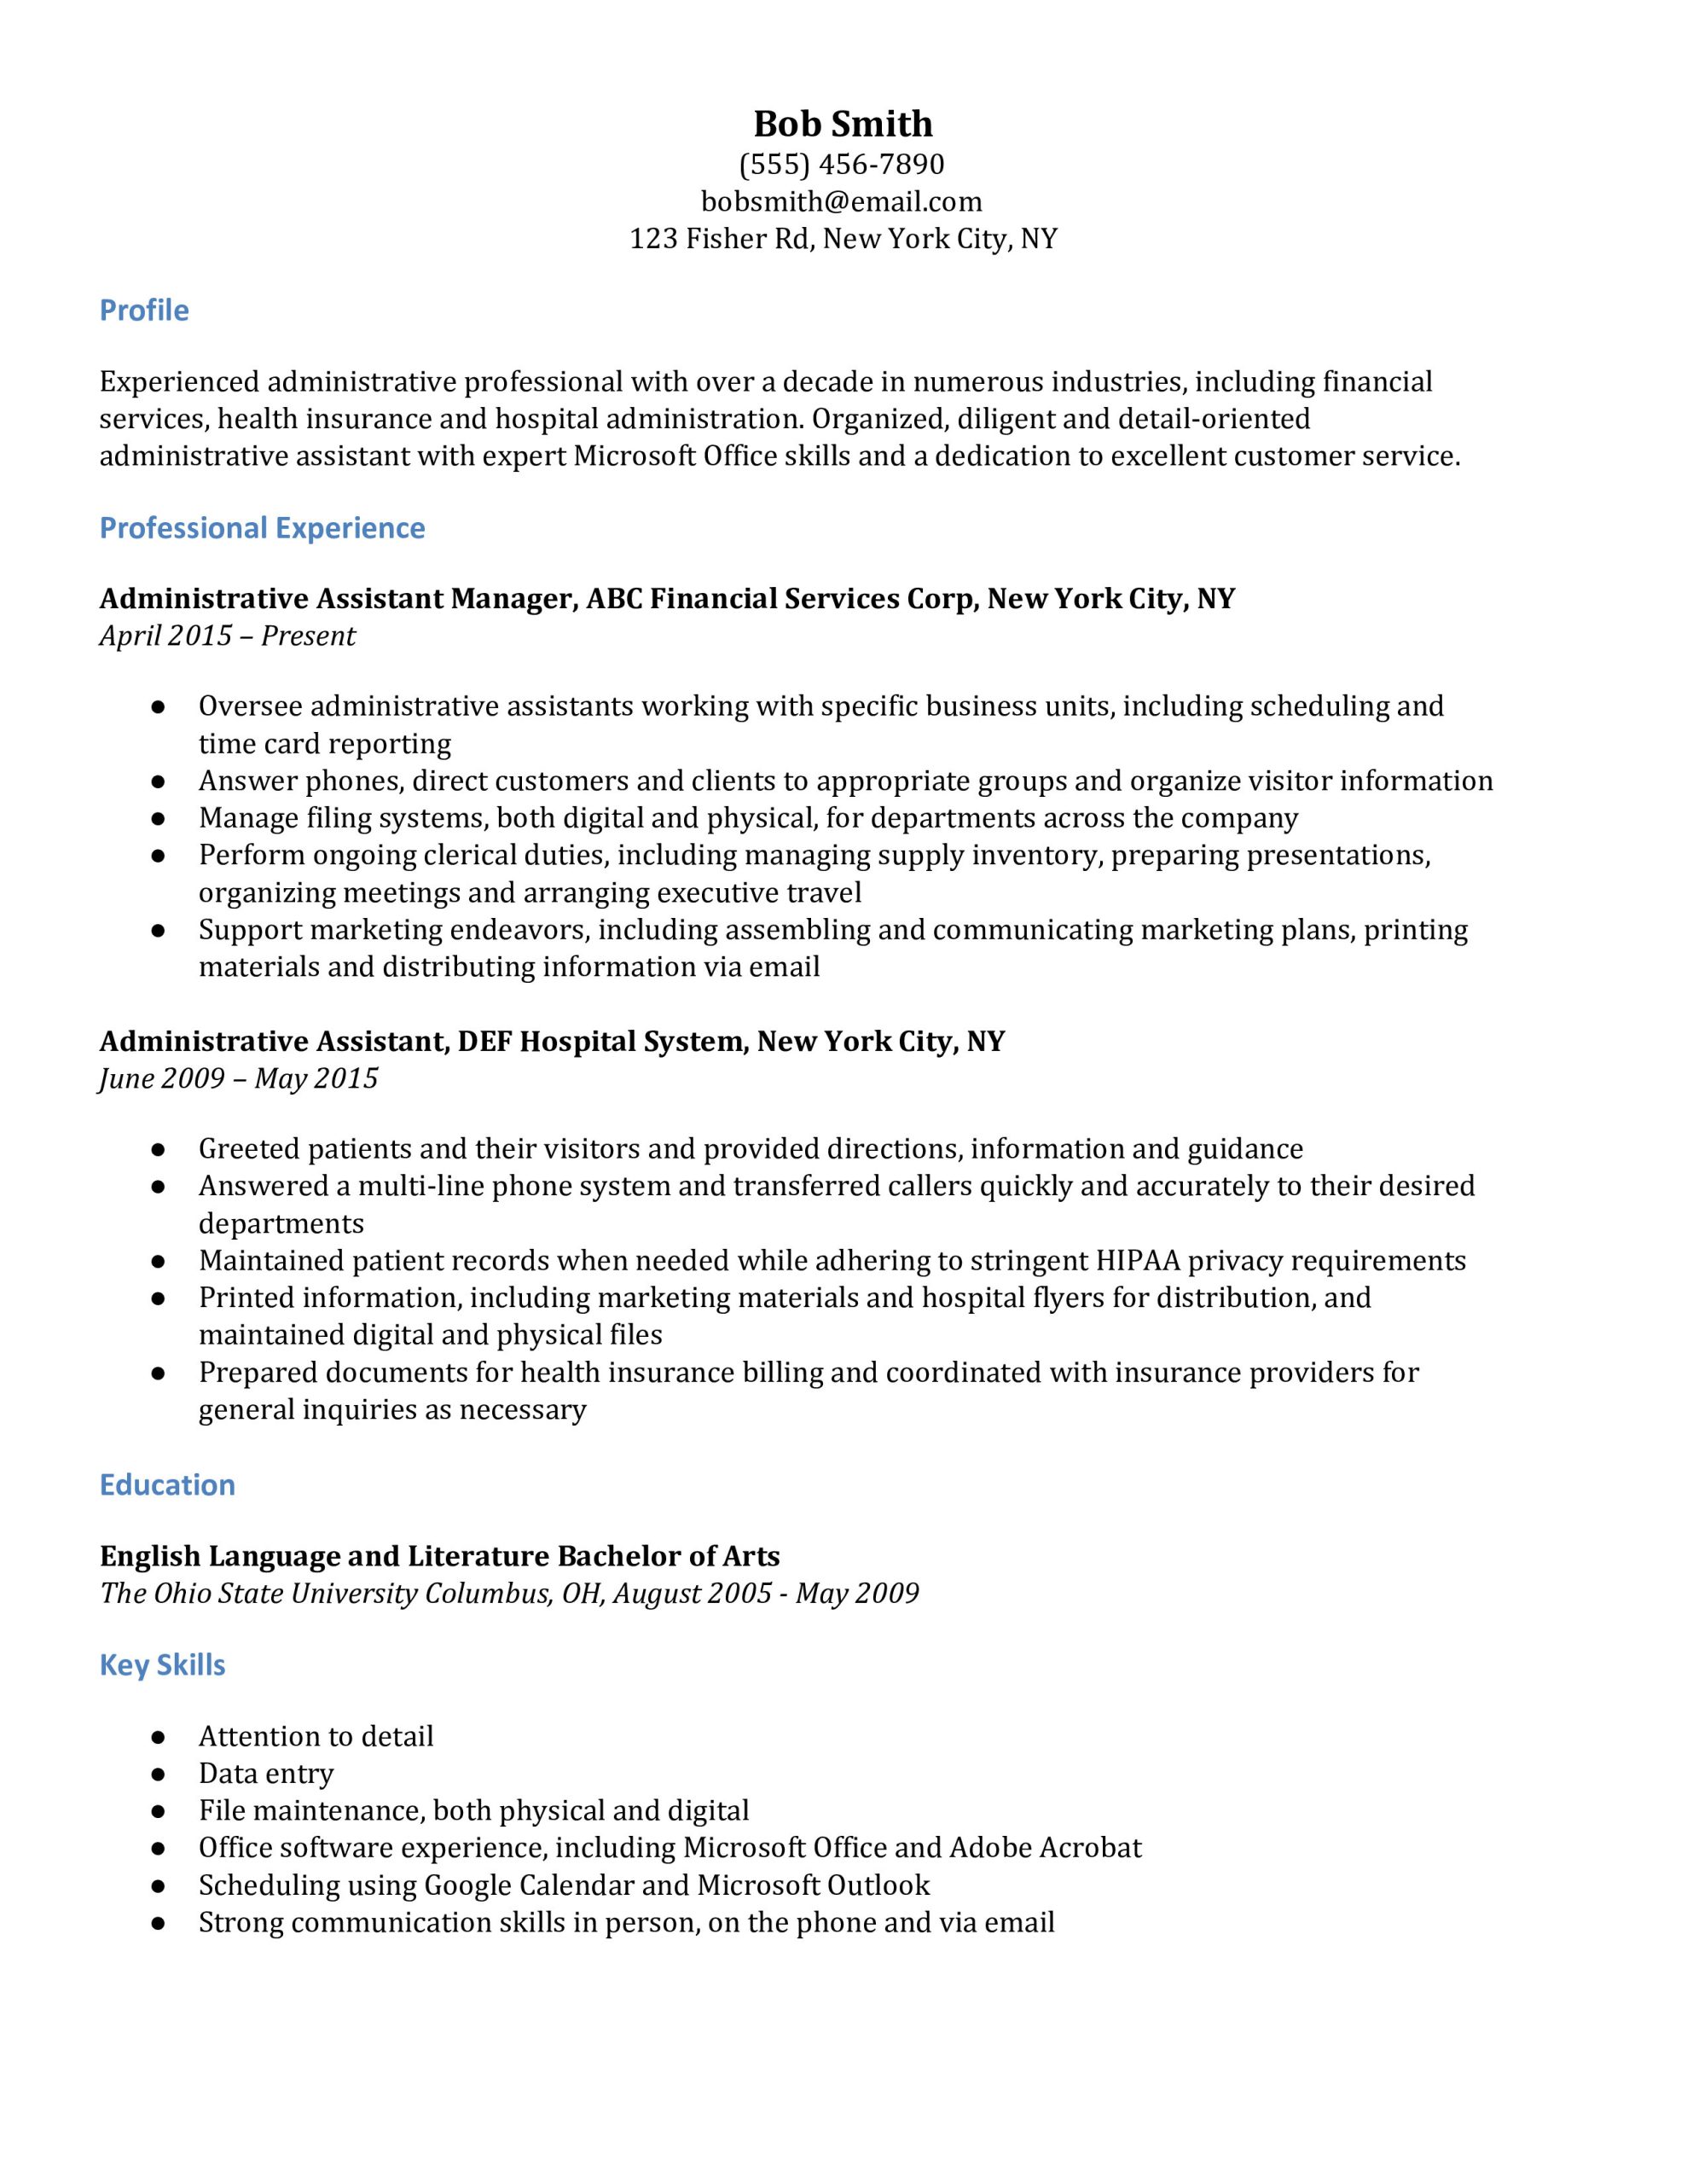 Entry Level Admin assistant Resume Sample Administrative assistant Resume Examples Resumebuilder.com